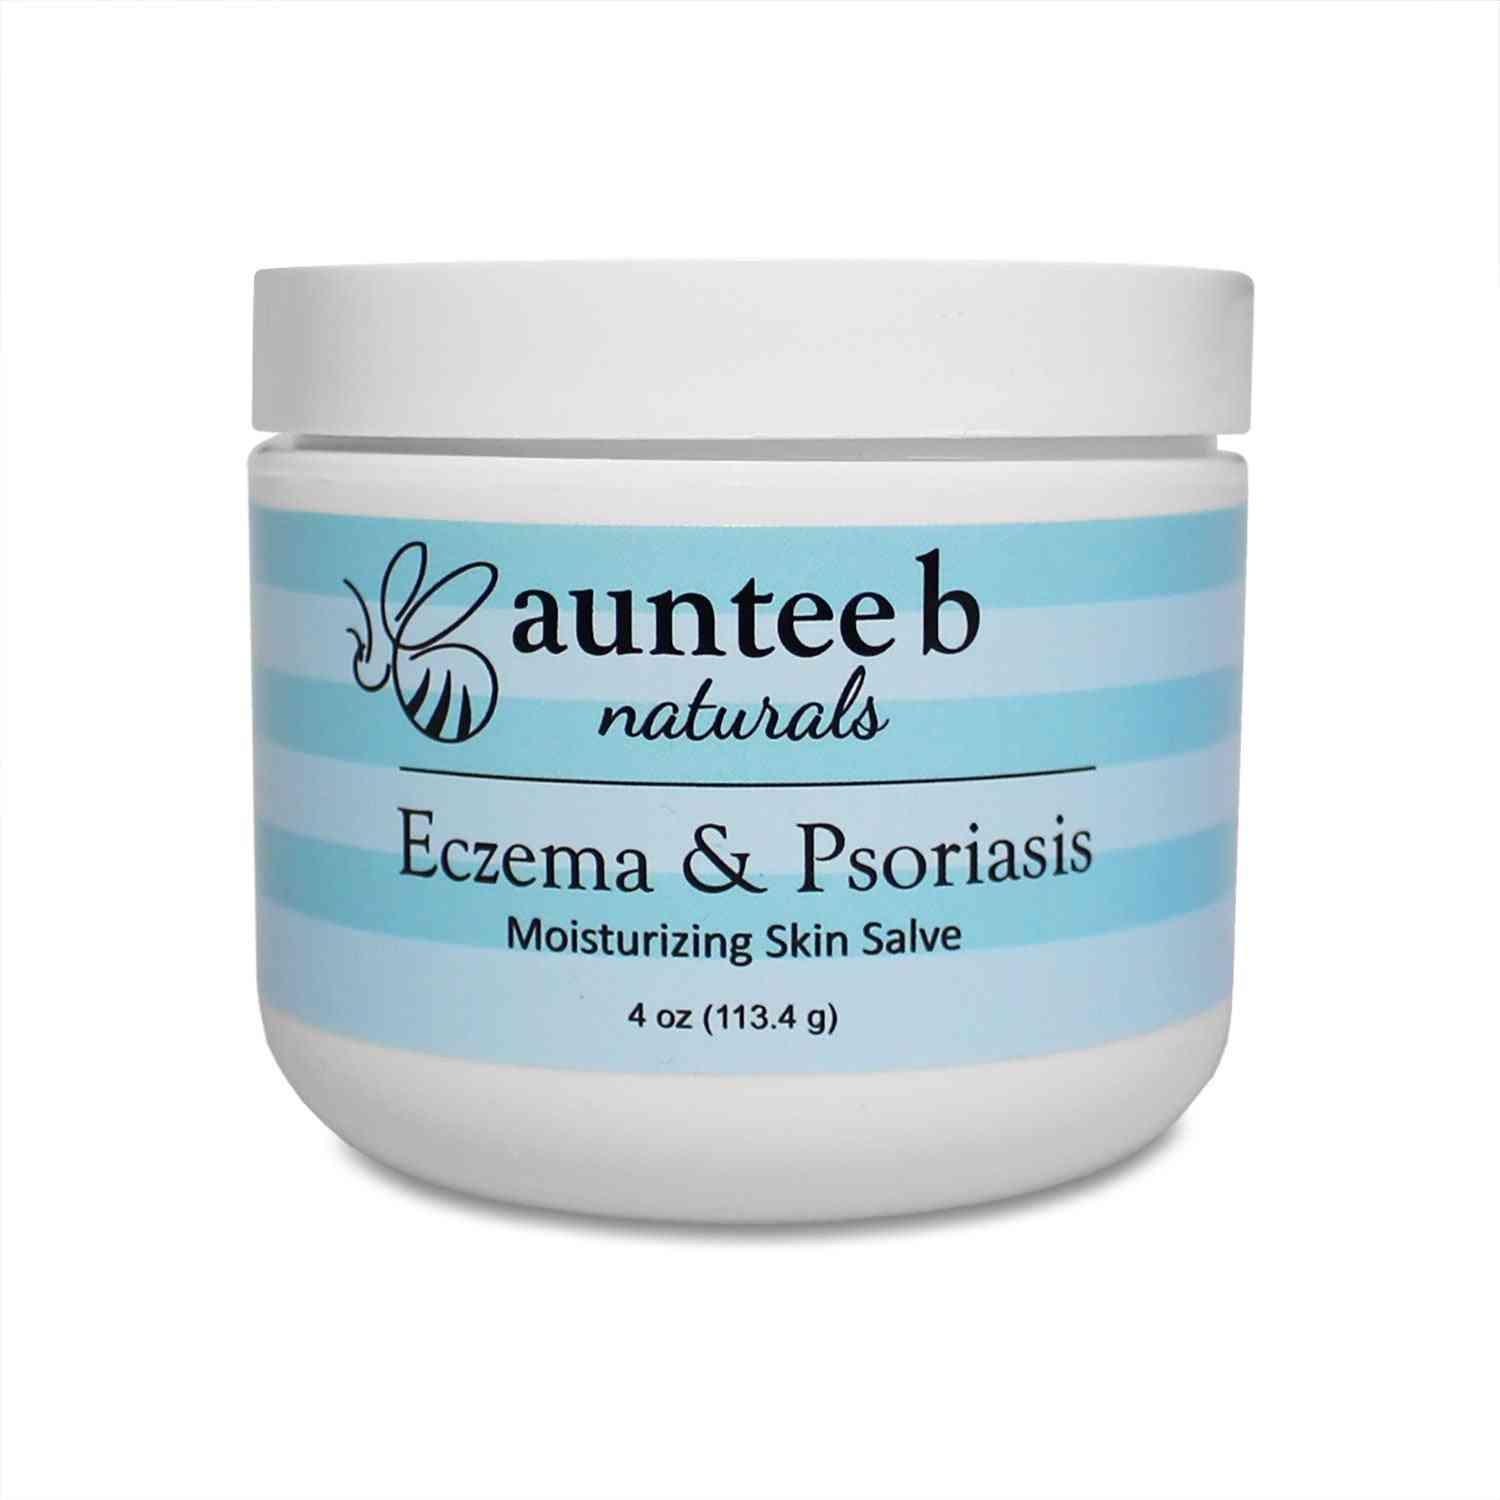 Auntee B Naturals™ Eczema & Psoriasis Moisturizing Skin Salve